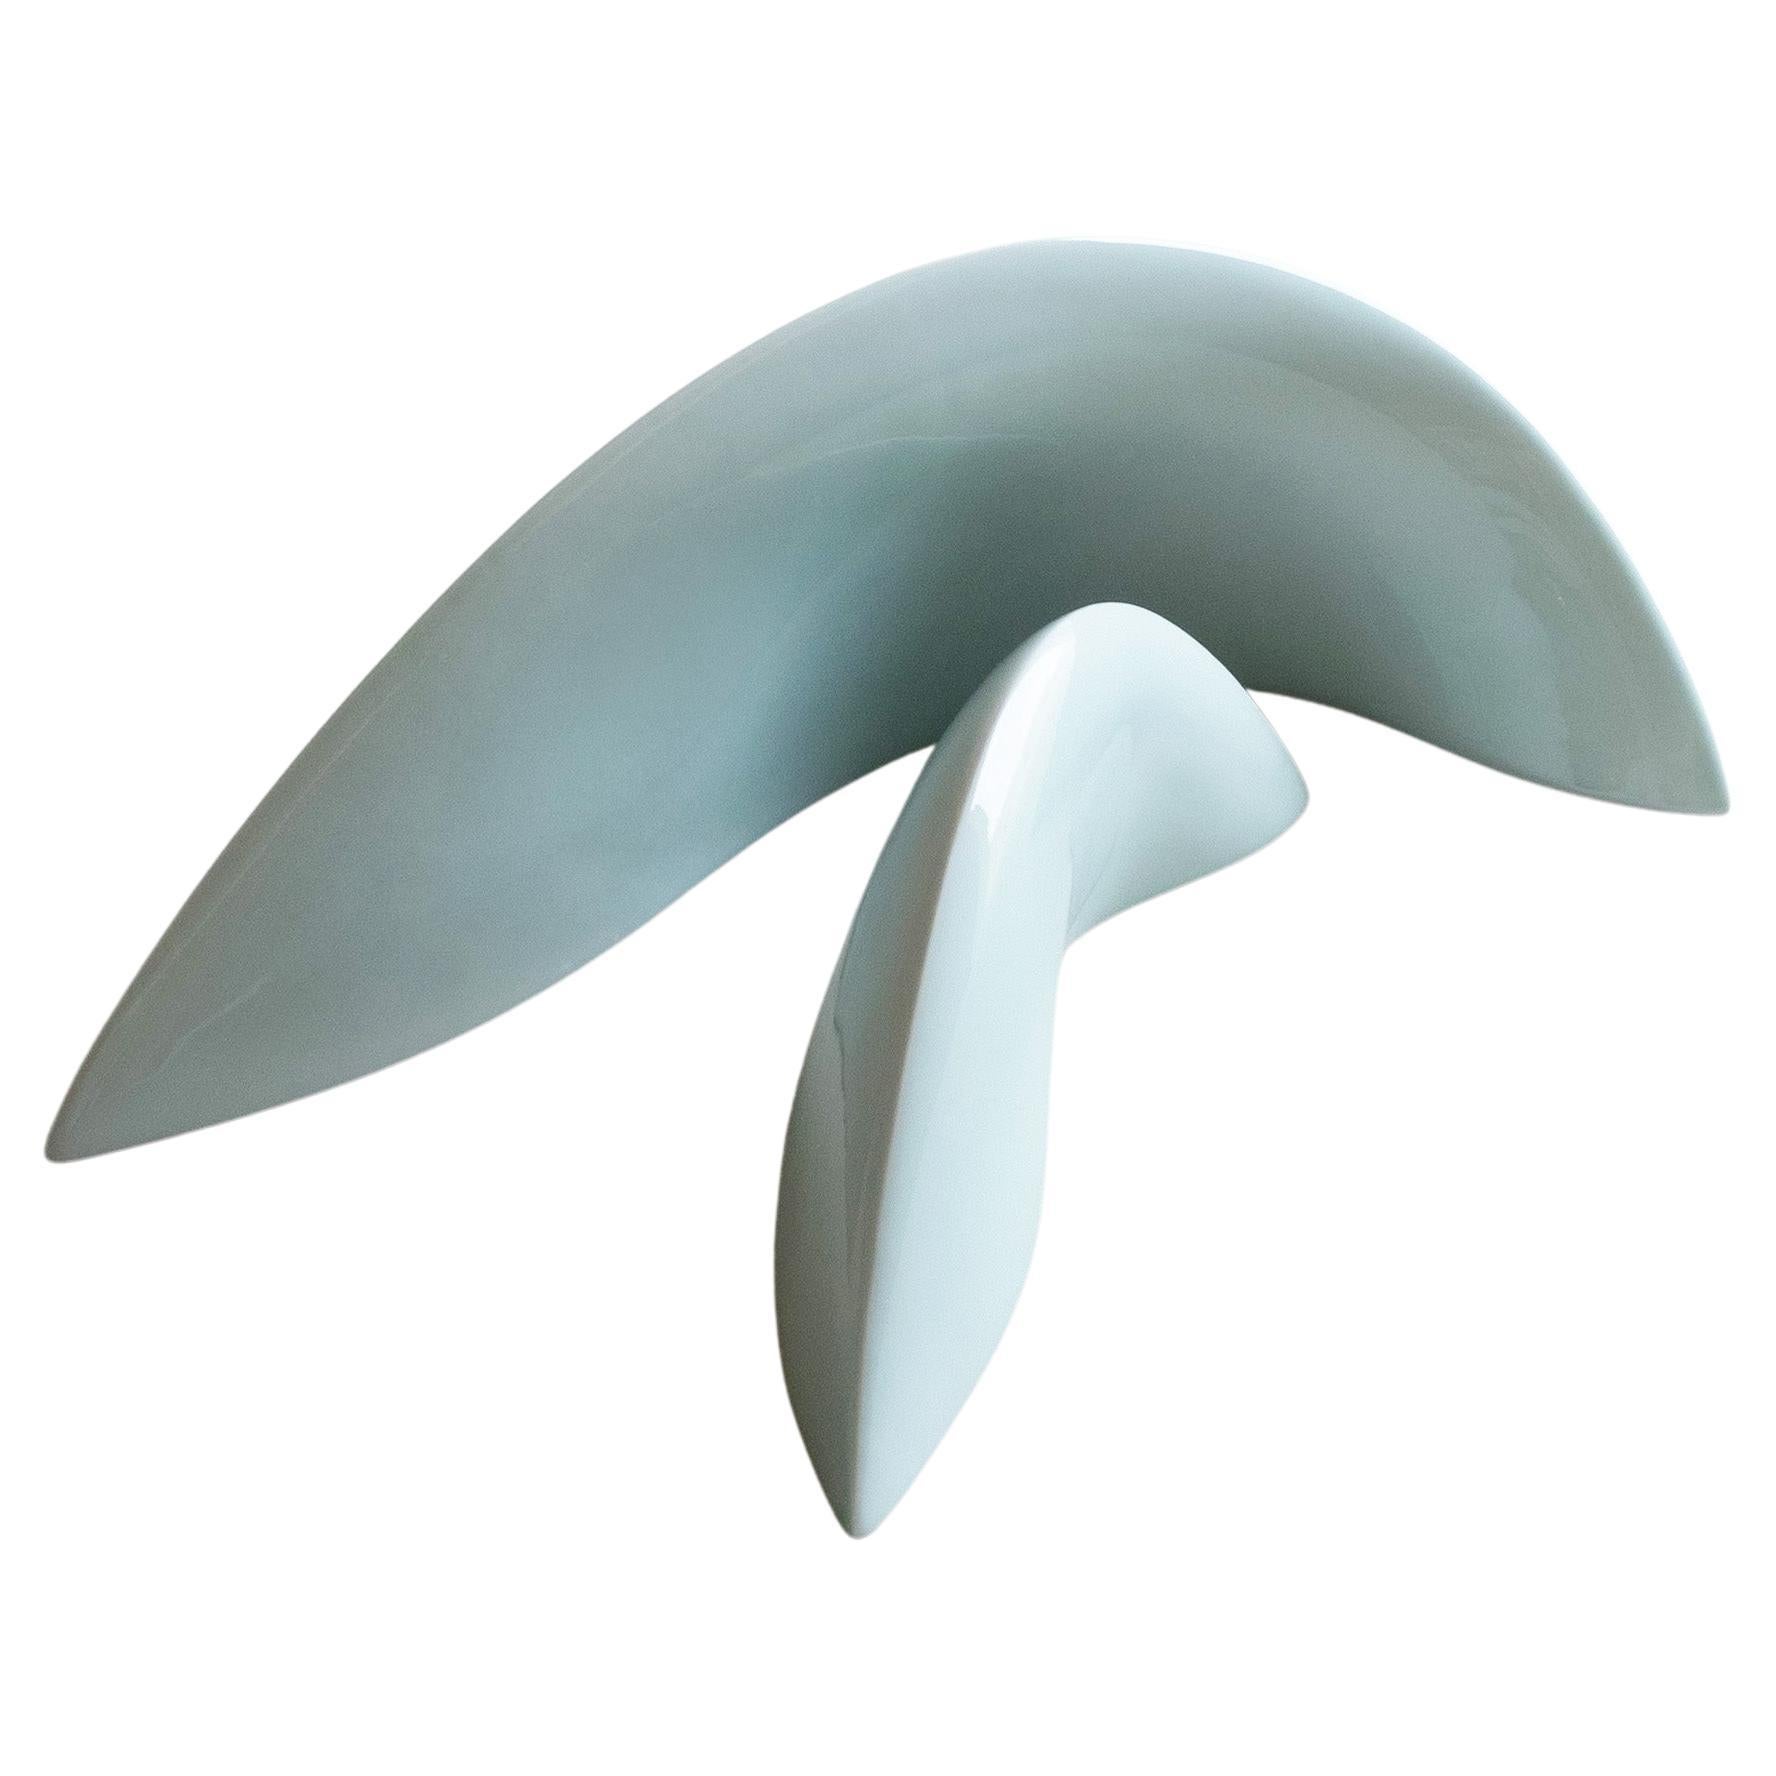 Organic Table Sculpture - Korean Ceramic Celadon Sculpture Pair by Soo Joo